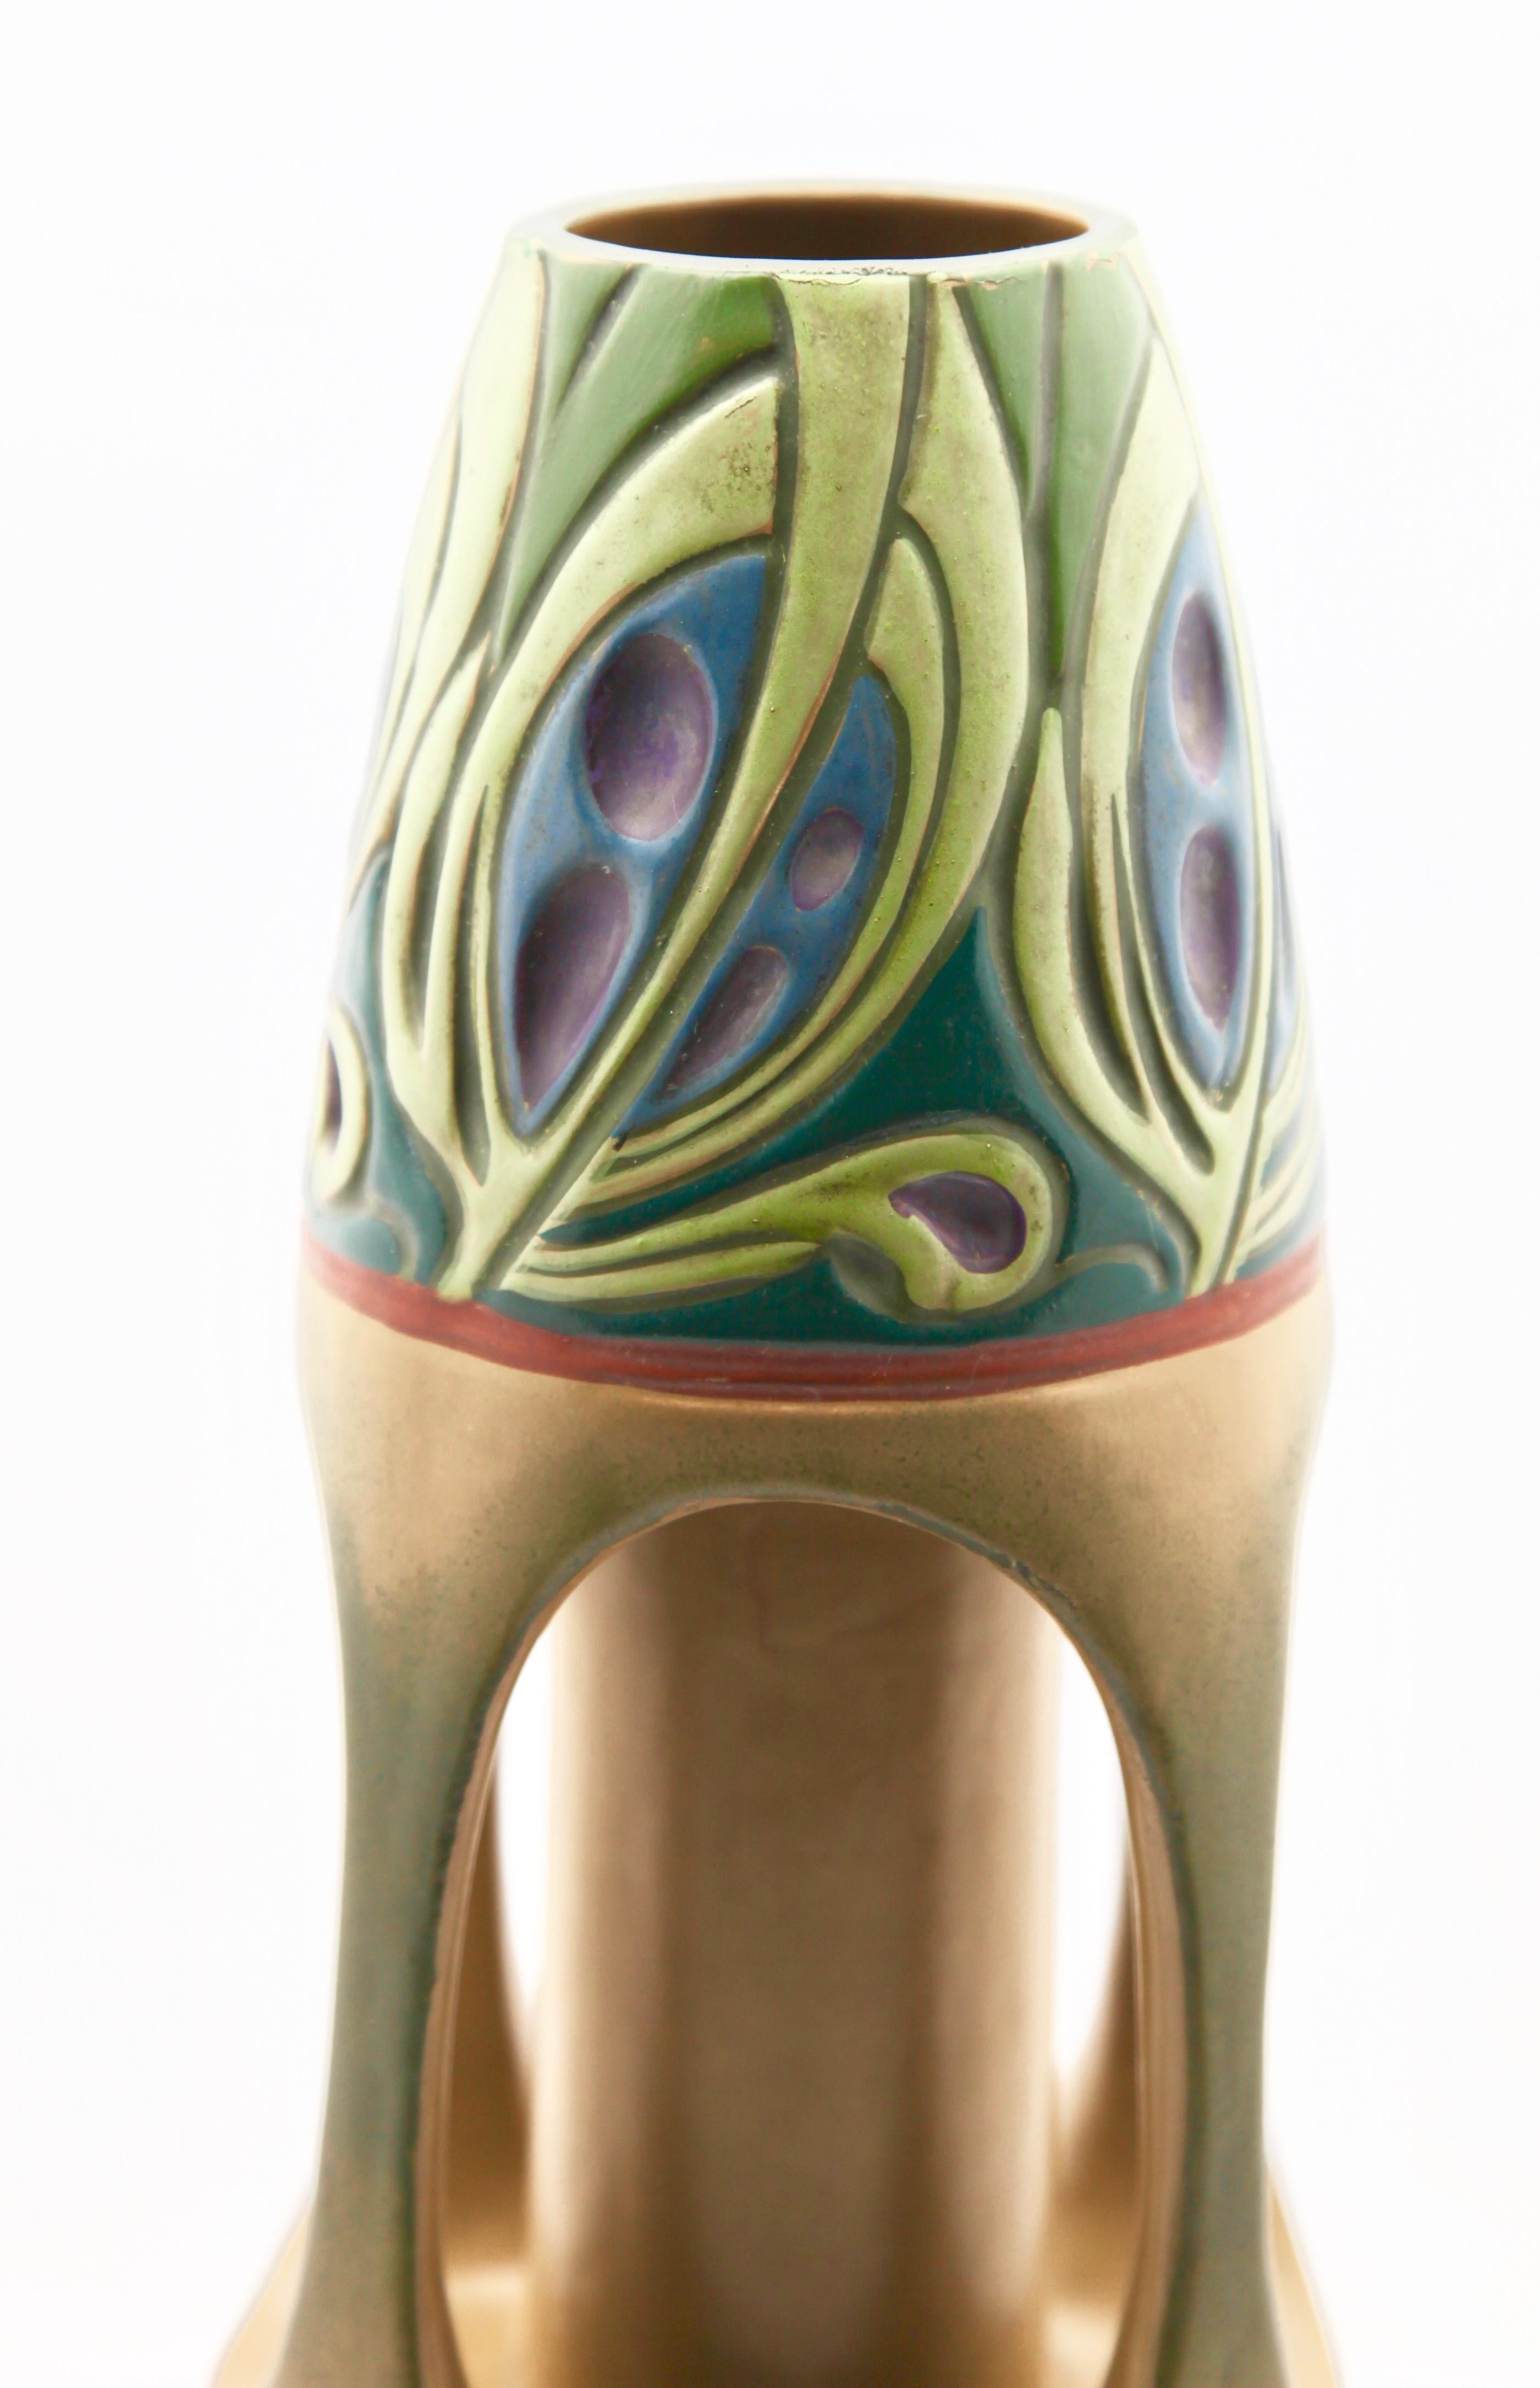 Glazed Pair of Art Nouveau Vases, 'Amphora' by Julius Dressler, Vienna, circa 1905